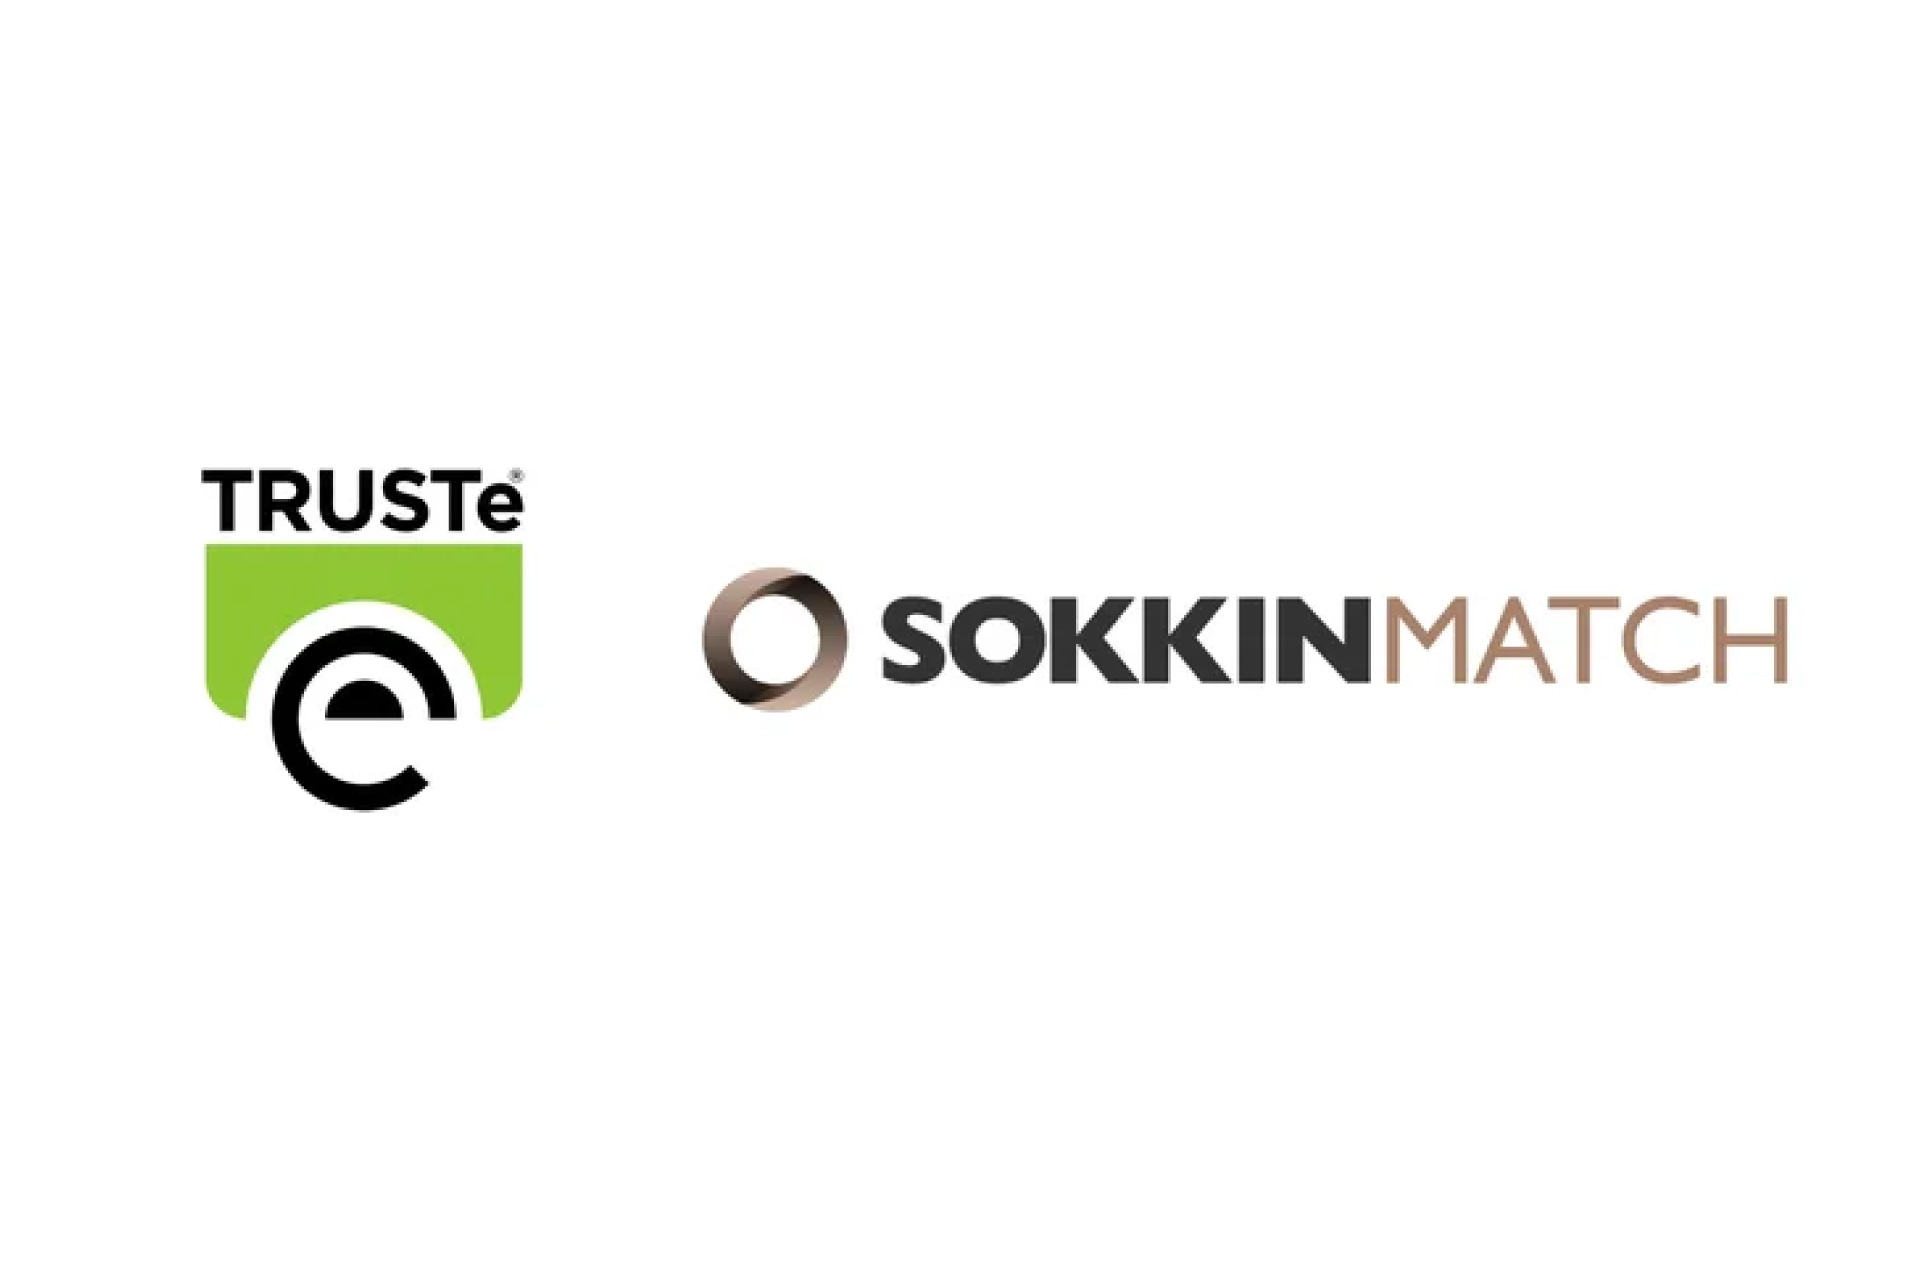 SOKKIN MATCHがプライバシー認証マーク「TRUSTe」を取得